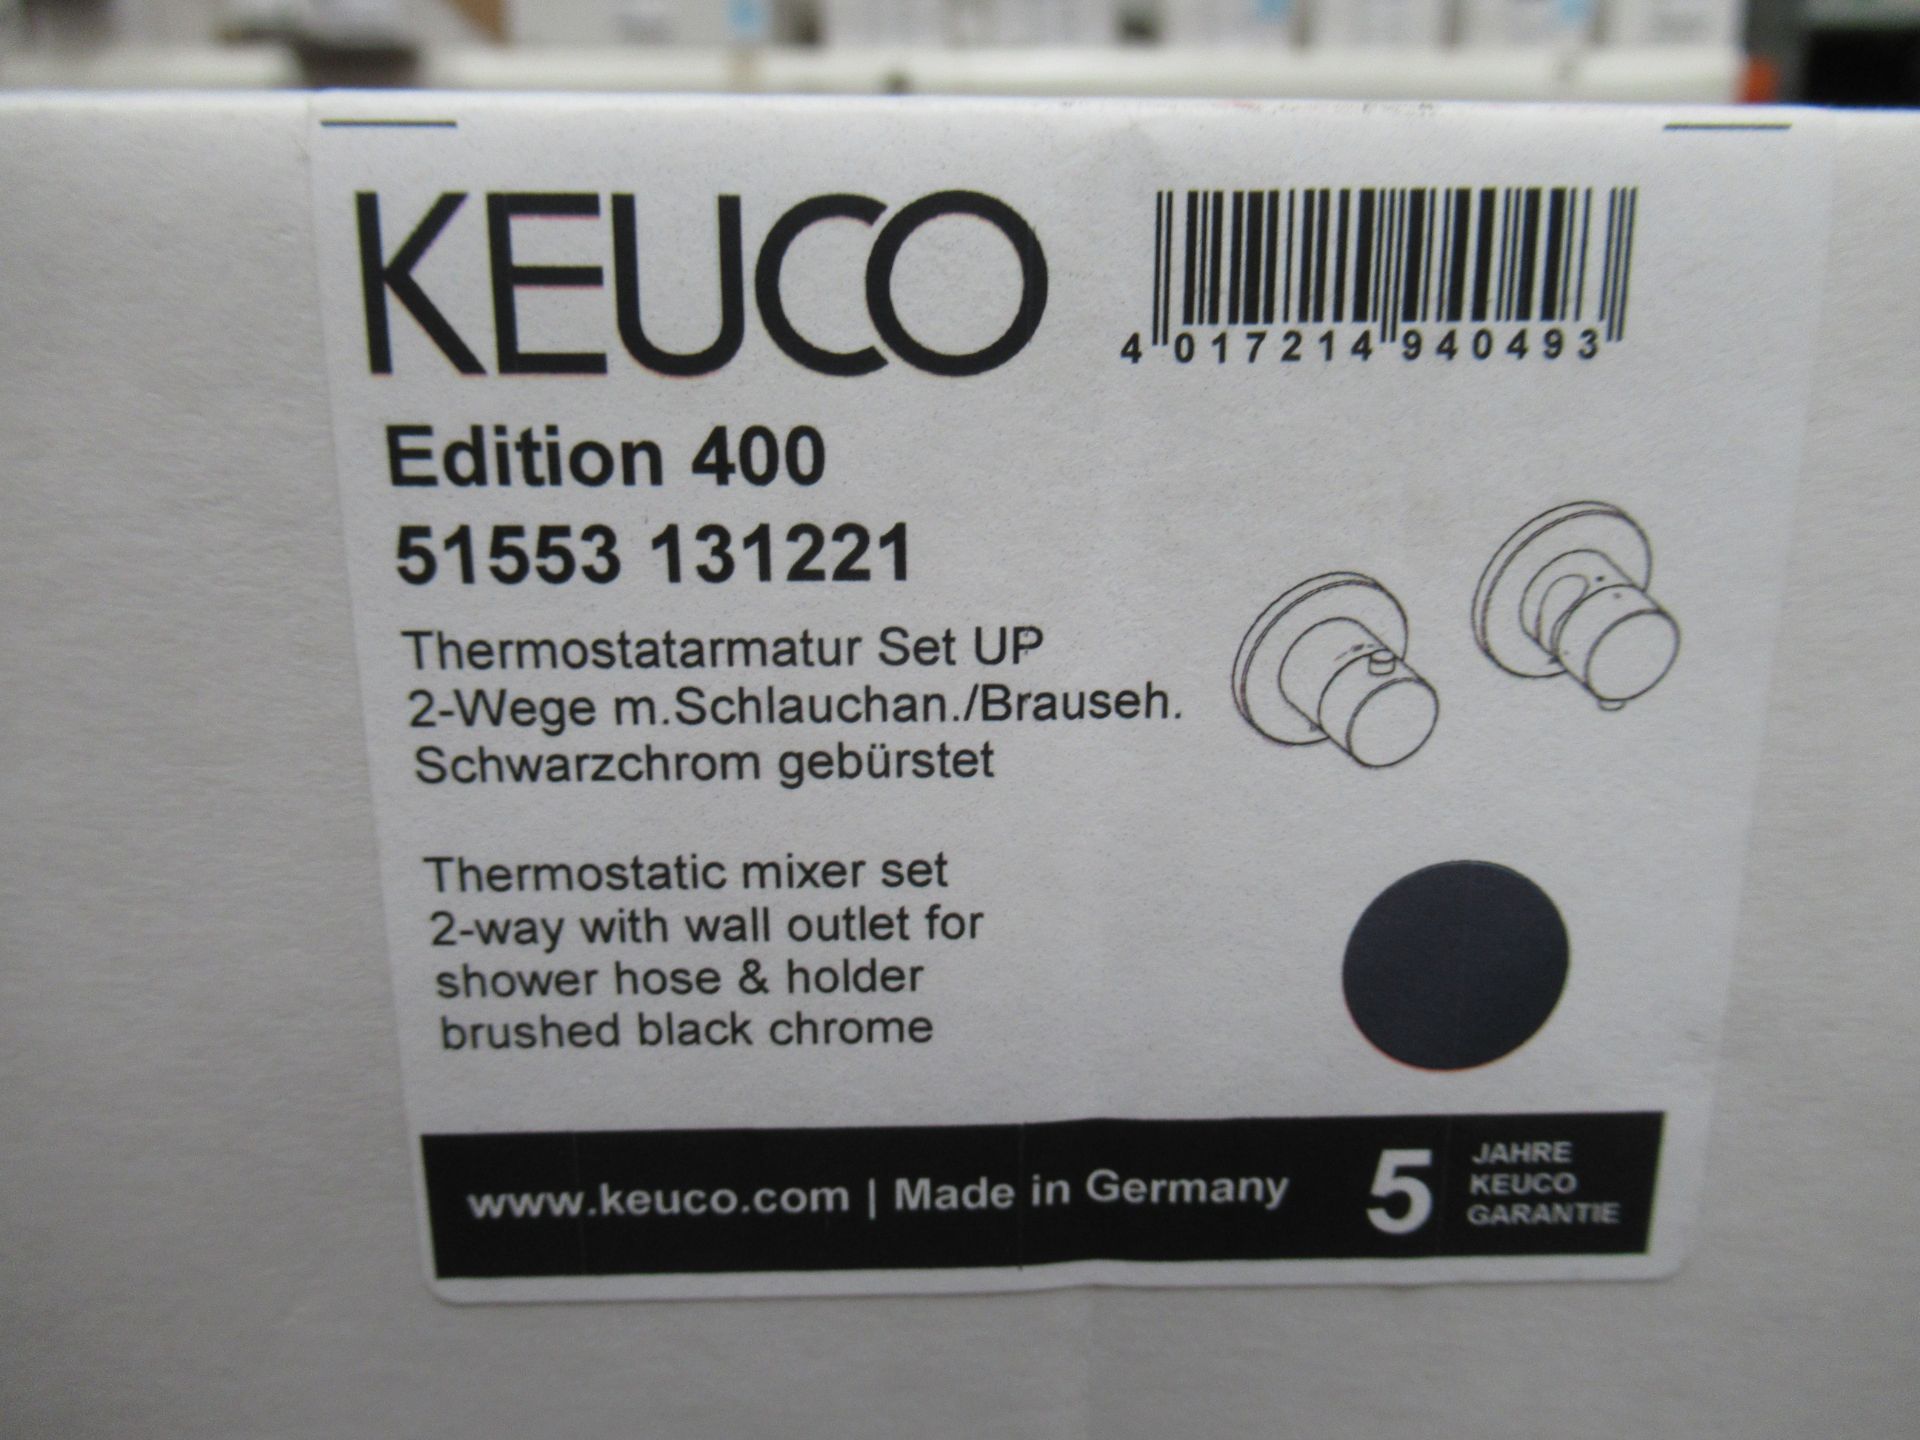 2 x Keuco Edition 400 thermostatic Mixer Sets Brushed Black Chrome, P/N 51553-131221 - Image 2 of 2